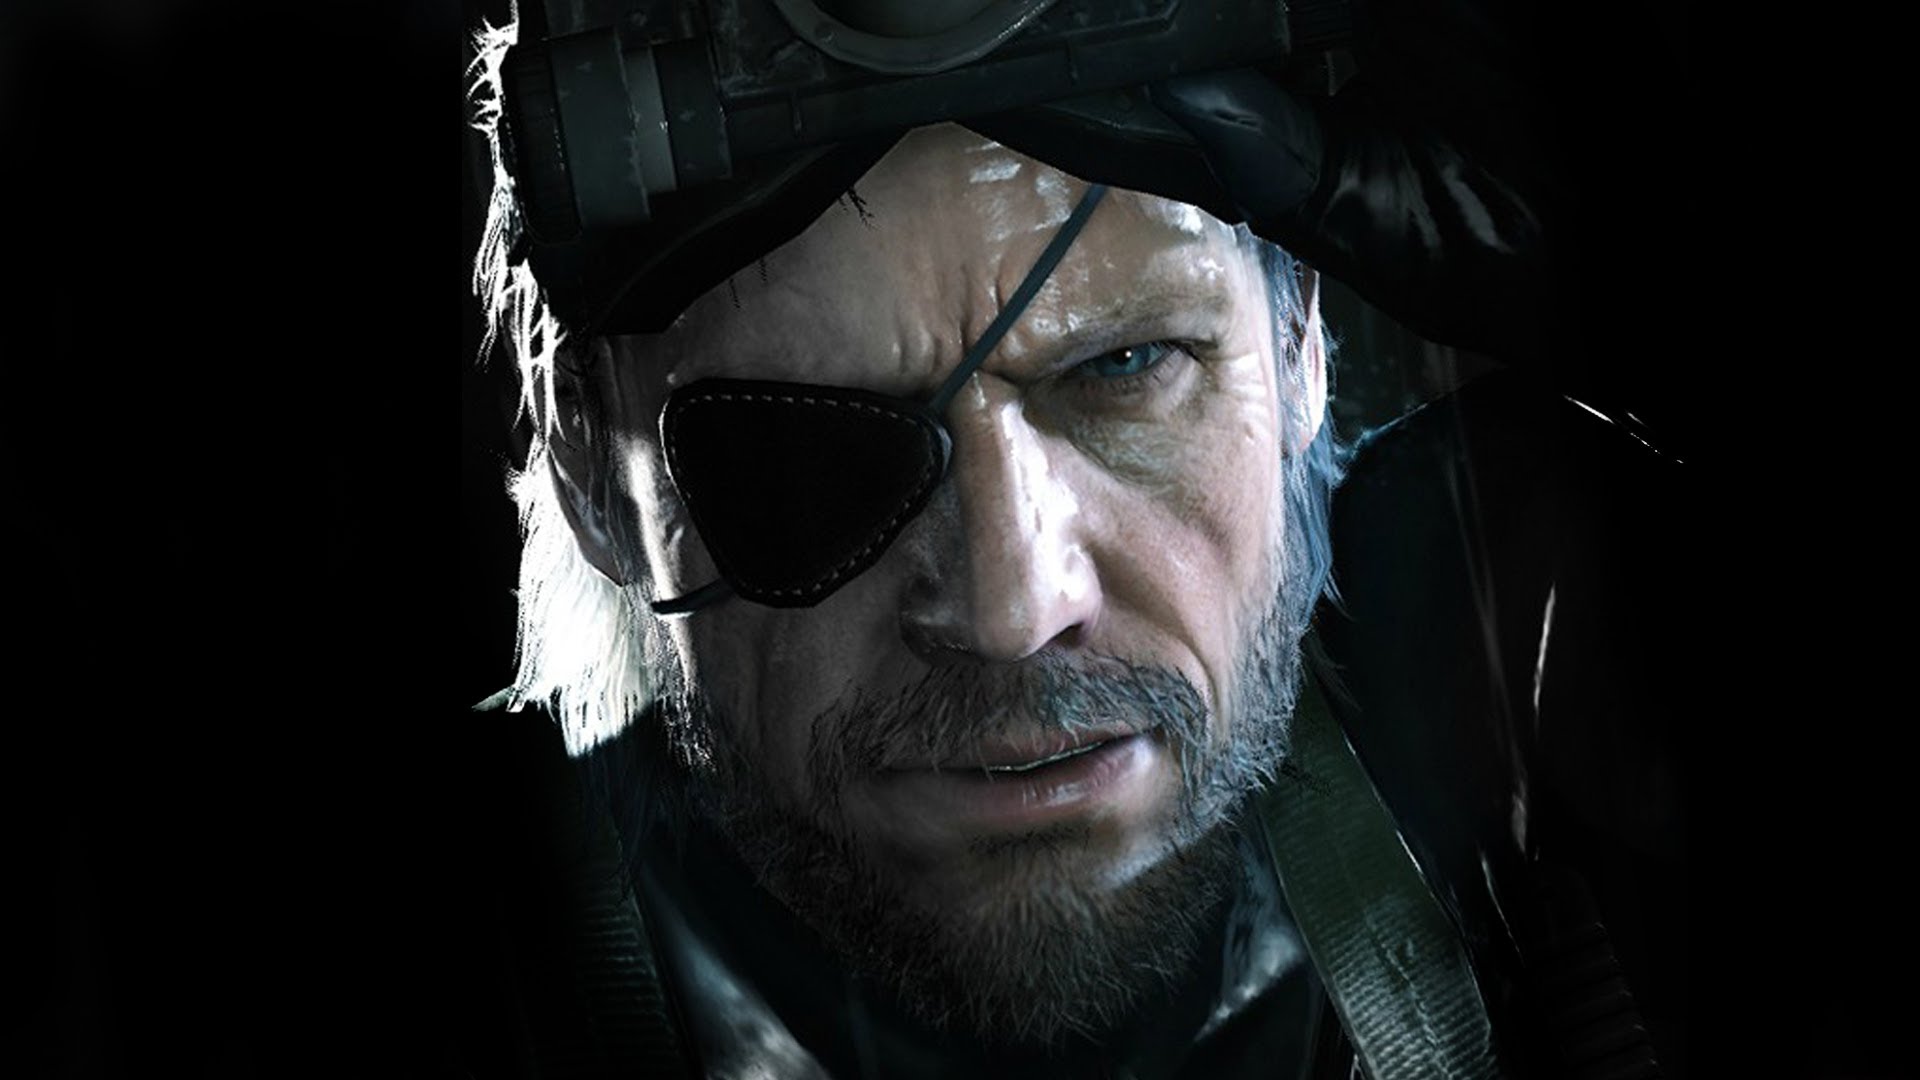 Metal Gear Solid 5 The Phantom Pain   E3 2013 Gameplay Trailer MGS5